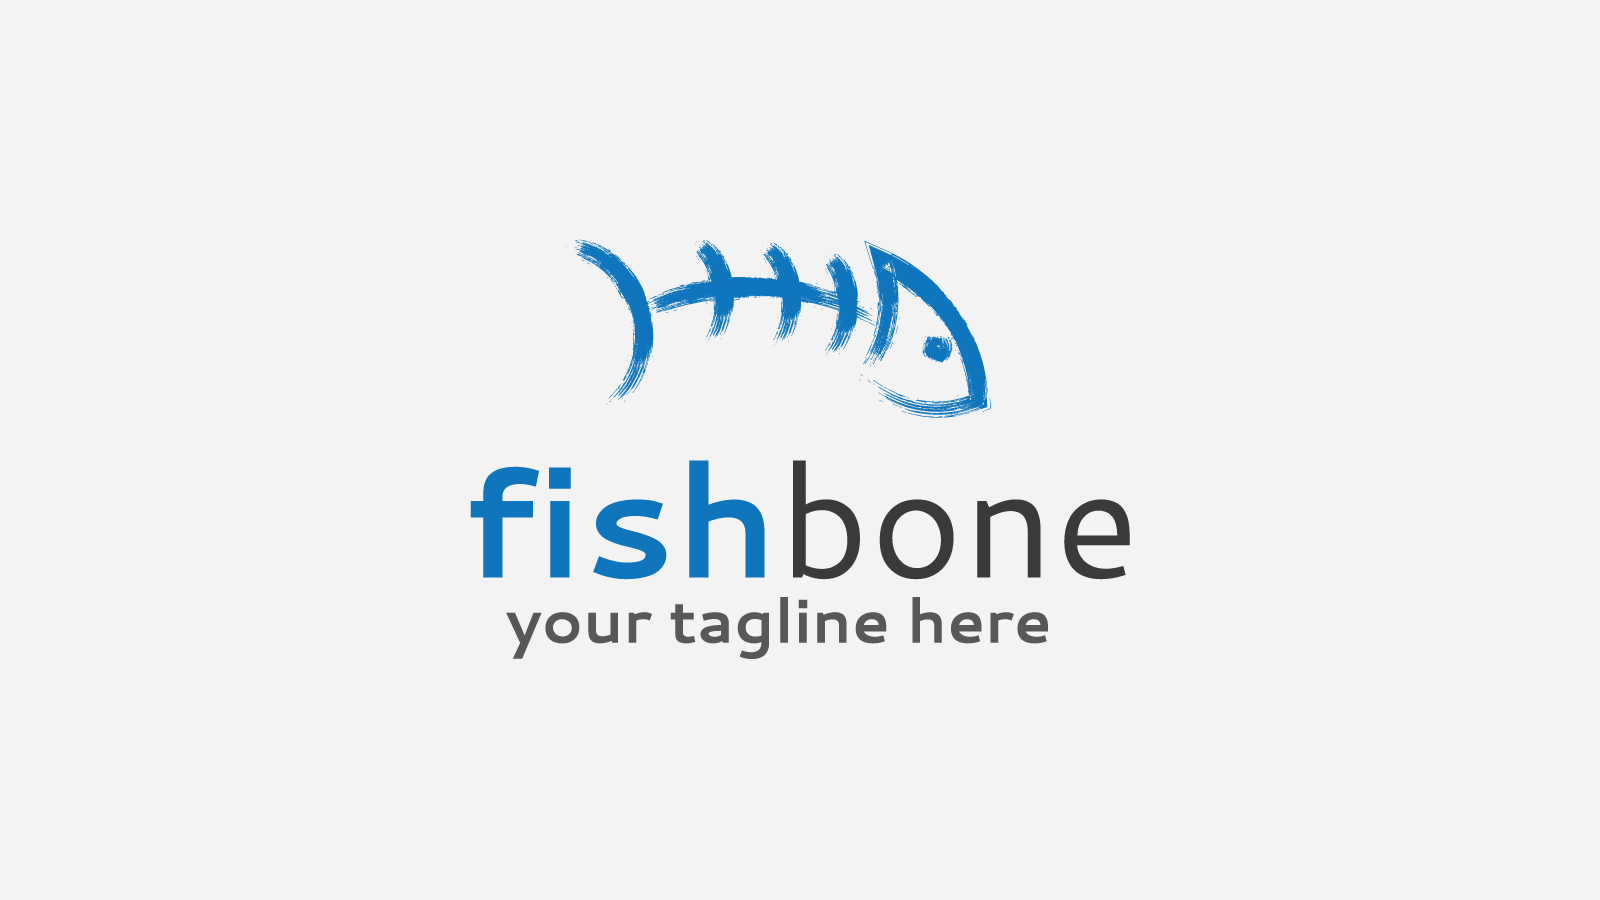 Fishbone Logo - fishbone free logo design. Zfreegraphic: Free vector logo downloads